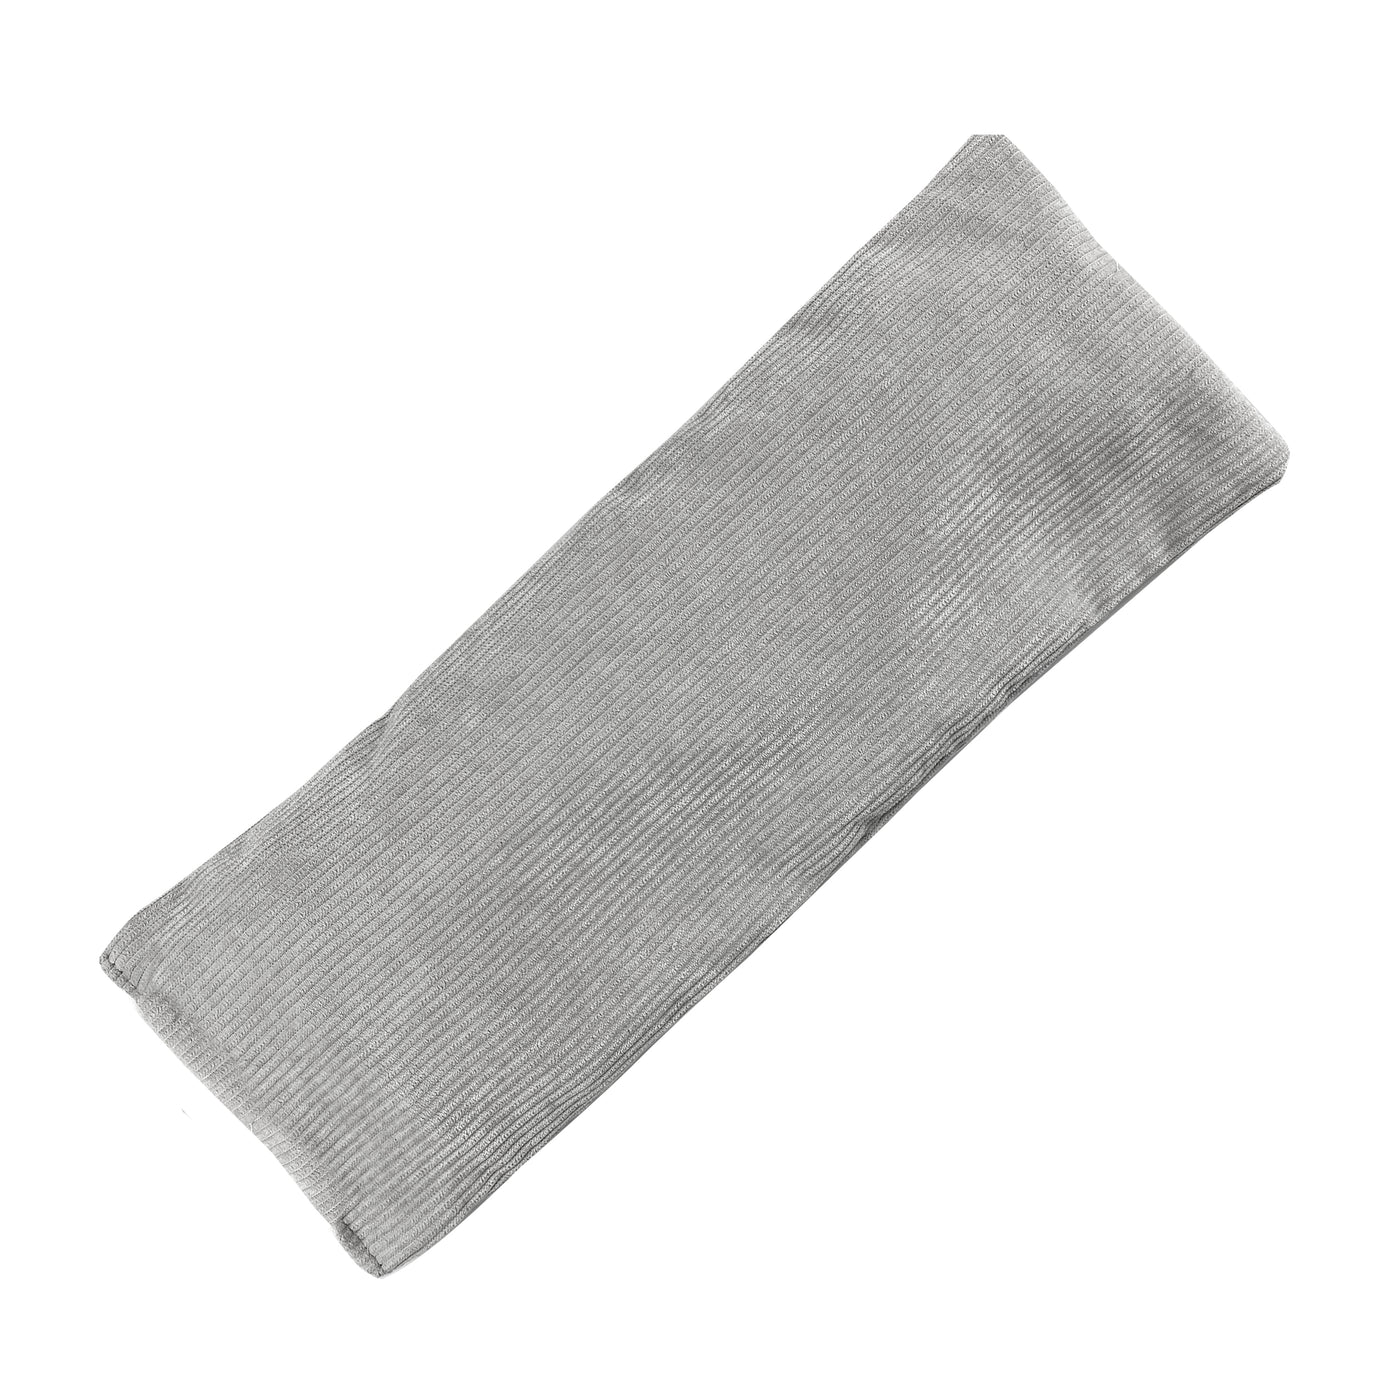 Wheat Heat Bag - Light Grey Cord